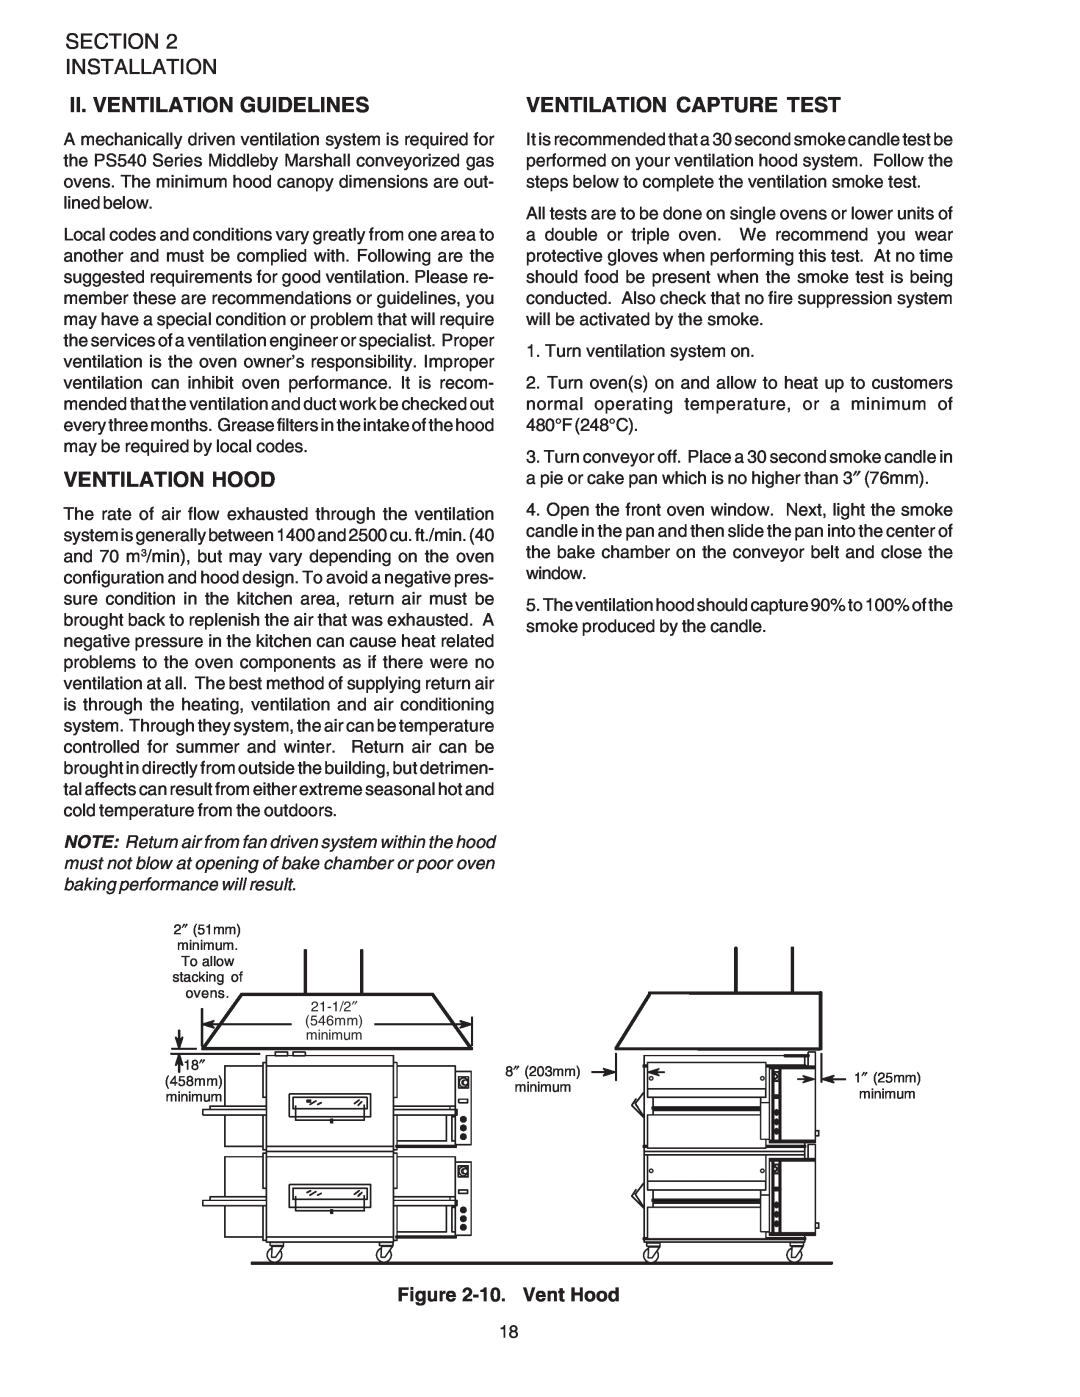 Middleby Marshall PS540G Section Installation, Ii. Ventilation Guidelines, Ventilation Capture Test, Ventilation Hood 